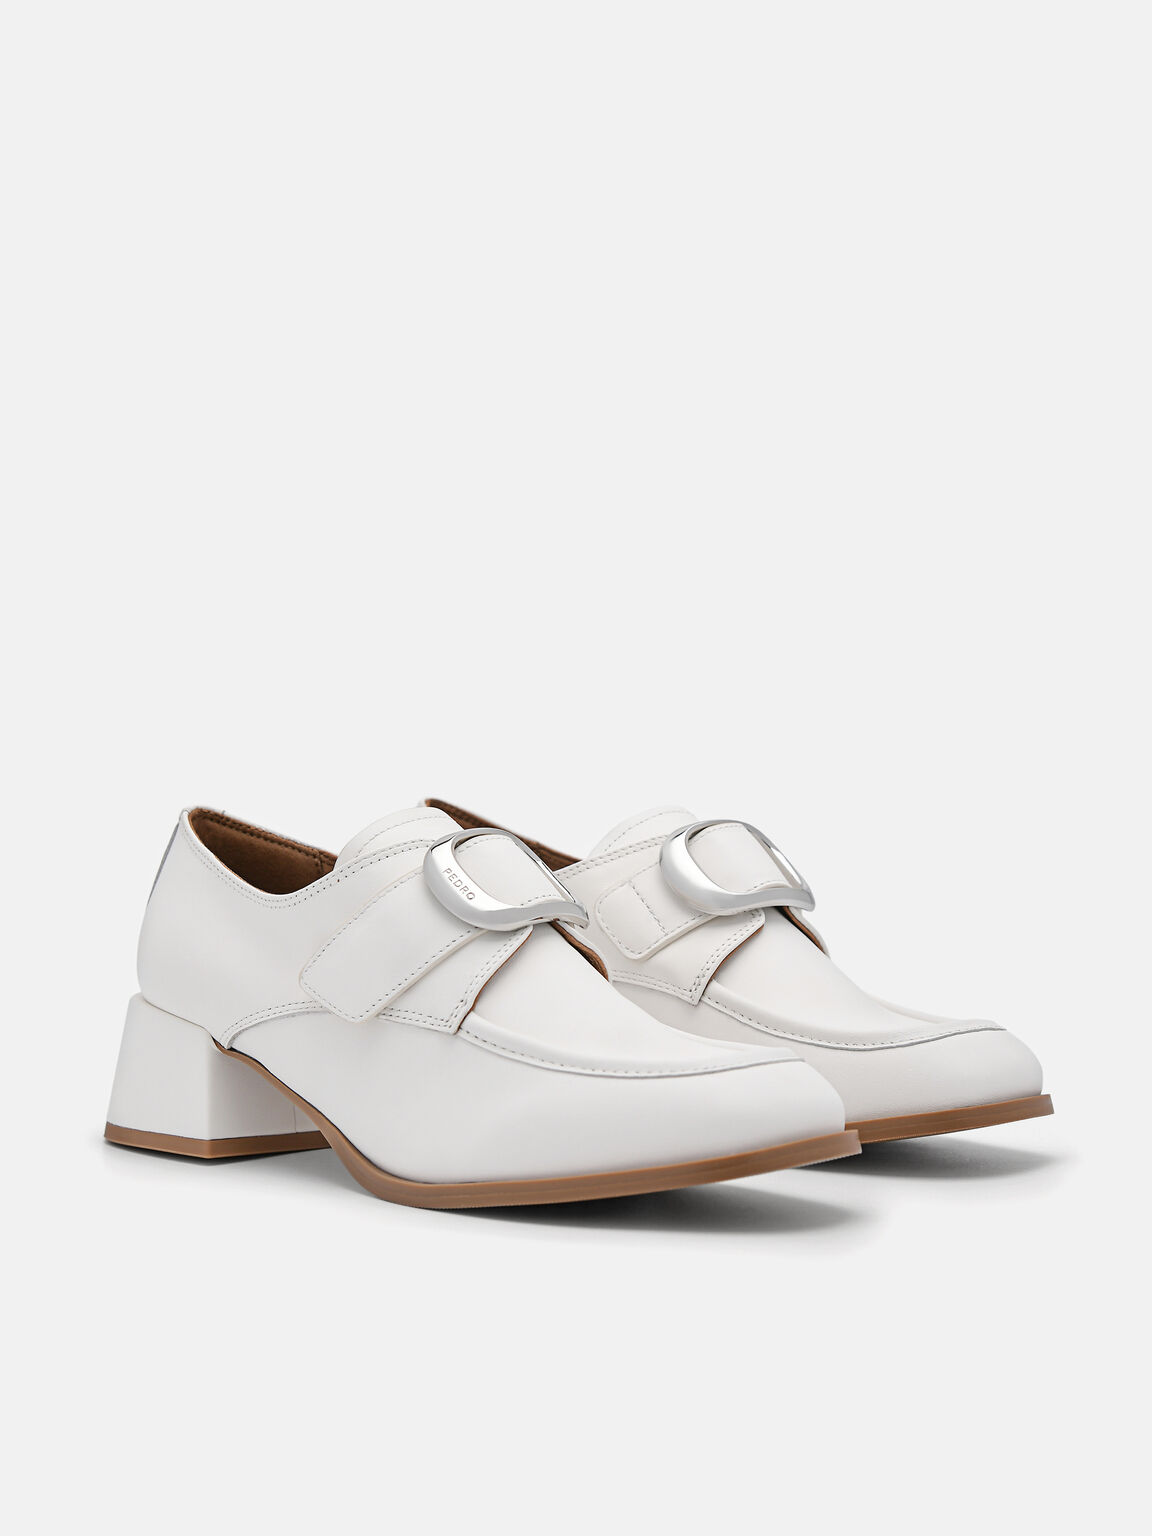 Eden Leather Heel Loafers, White, hi-res